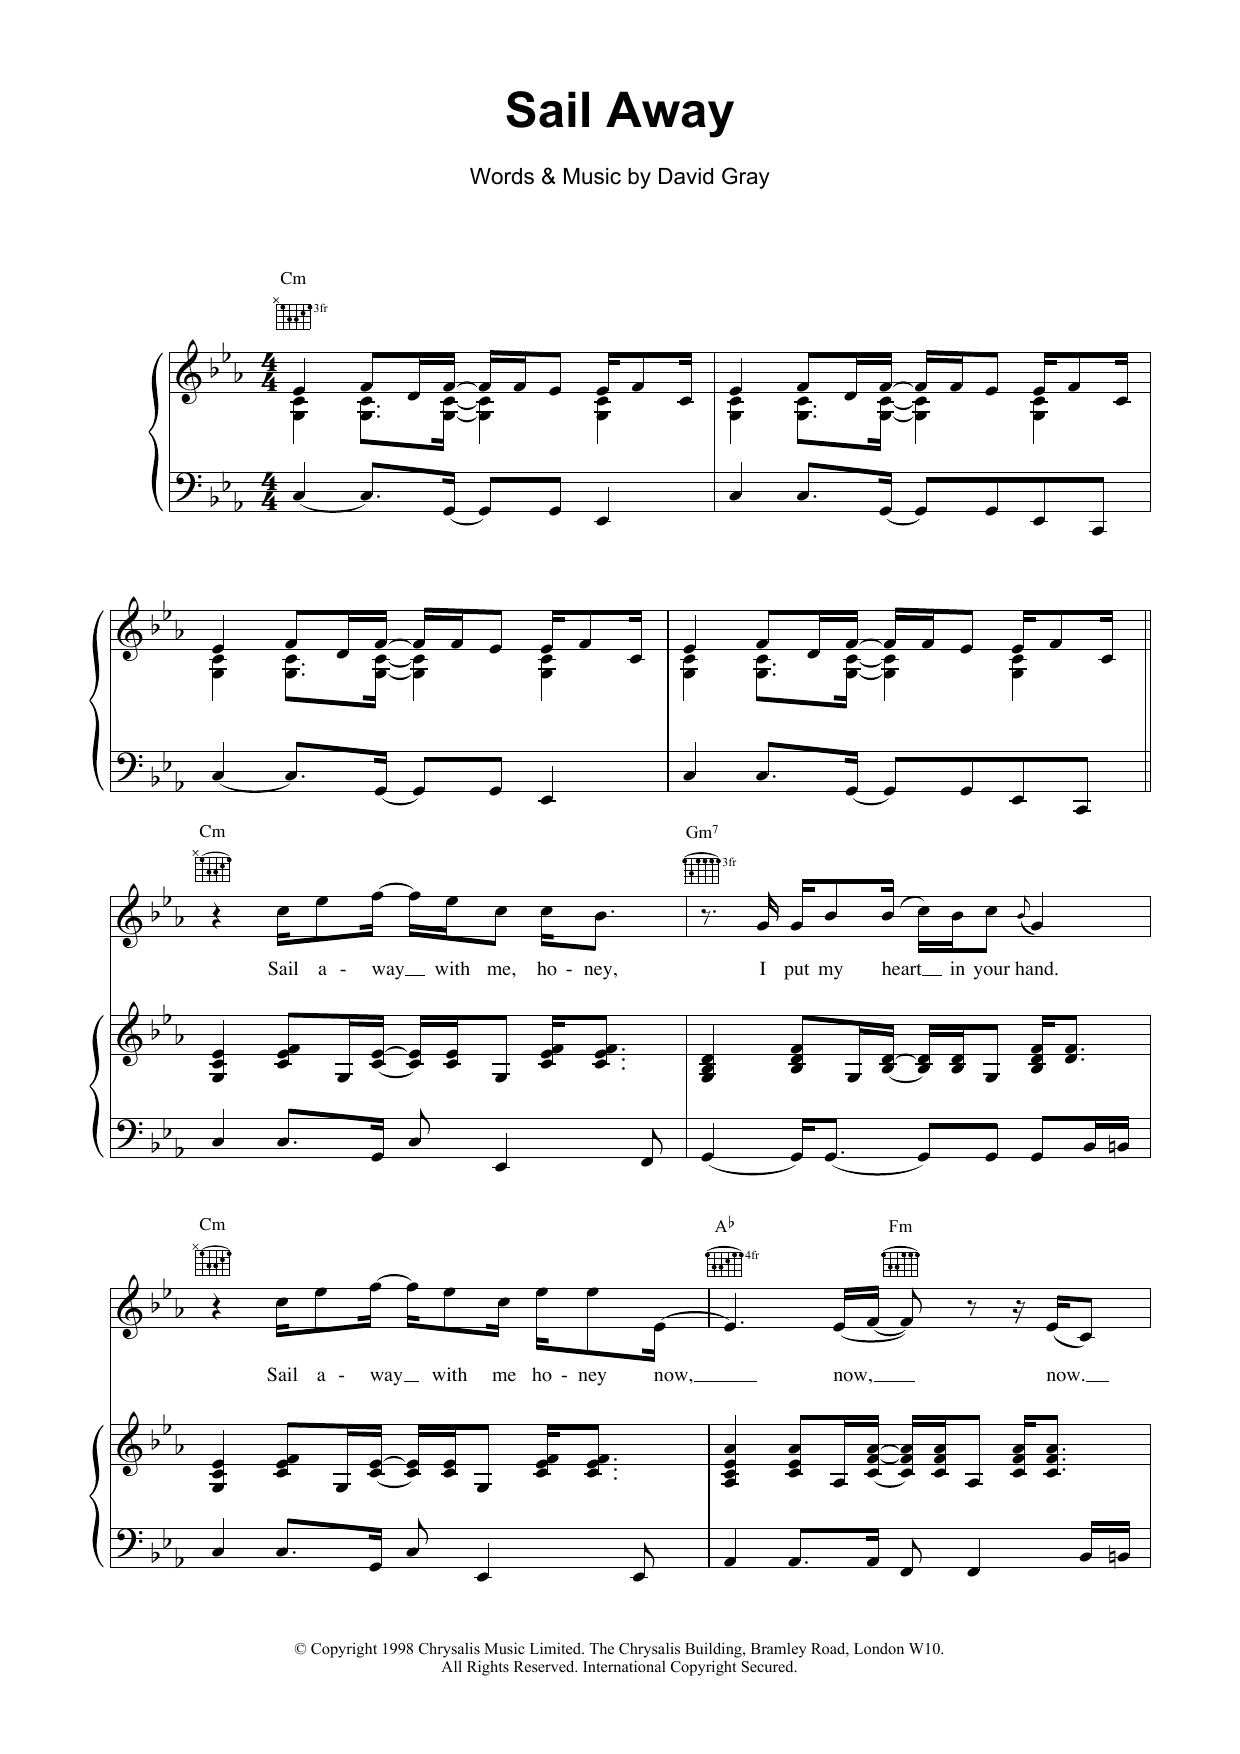 David Gray Sail Away Sheet Music Notes & Chords for Alto Saxophone - Download or Print PDF